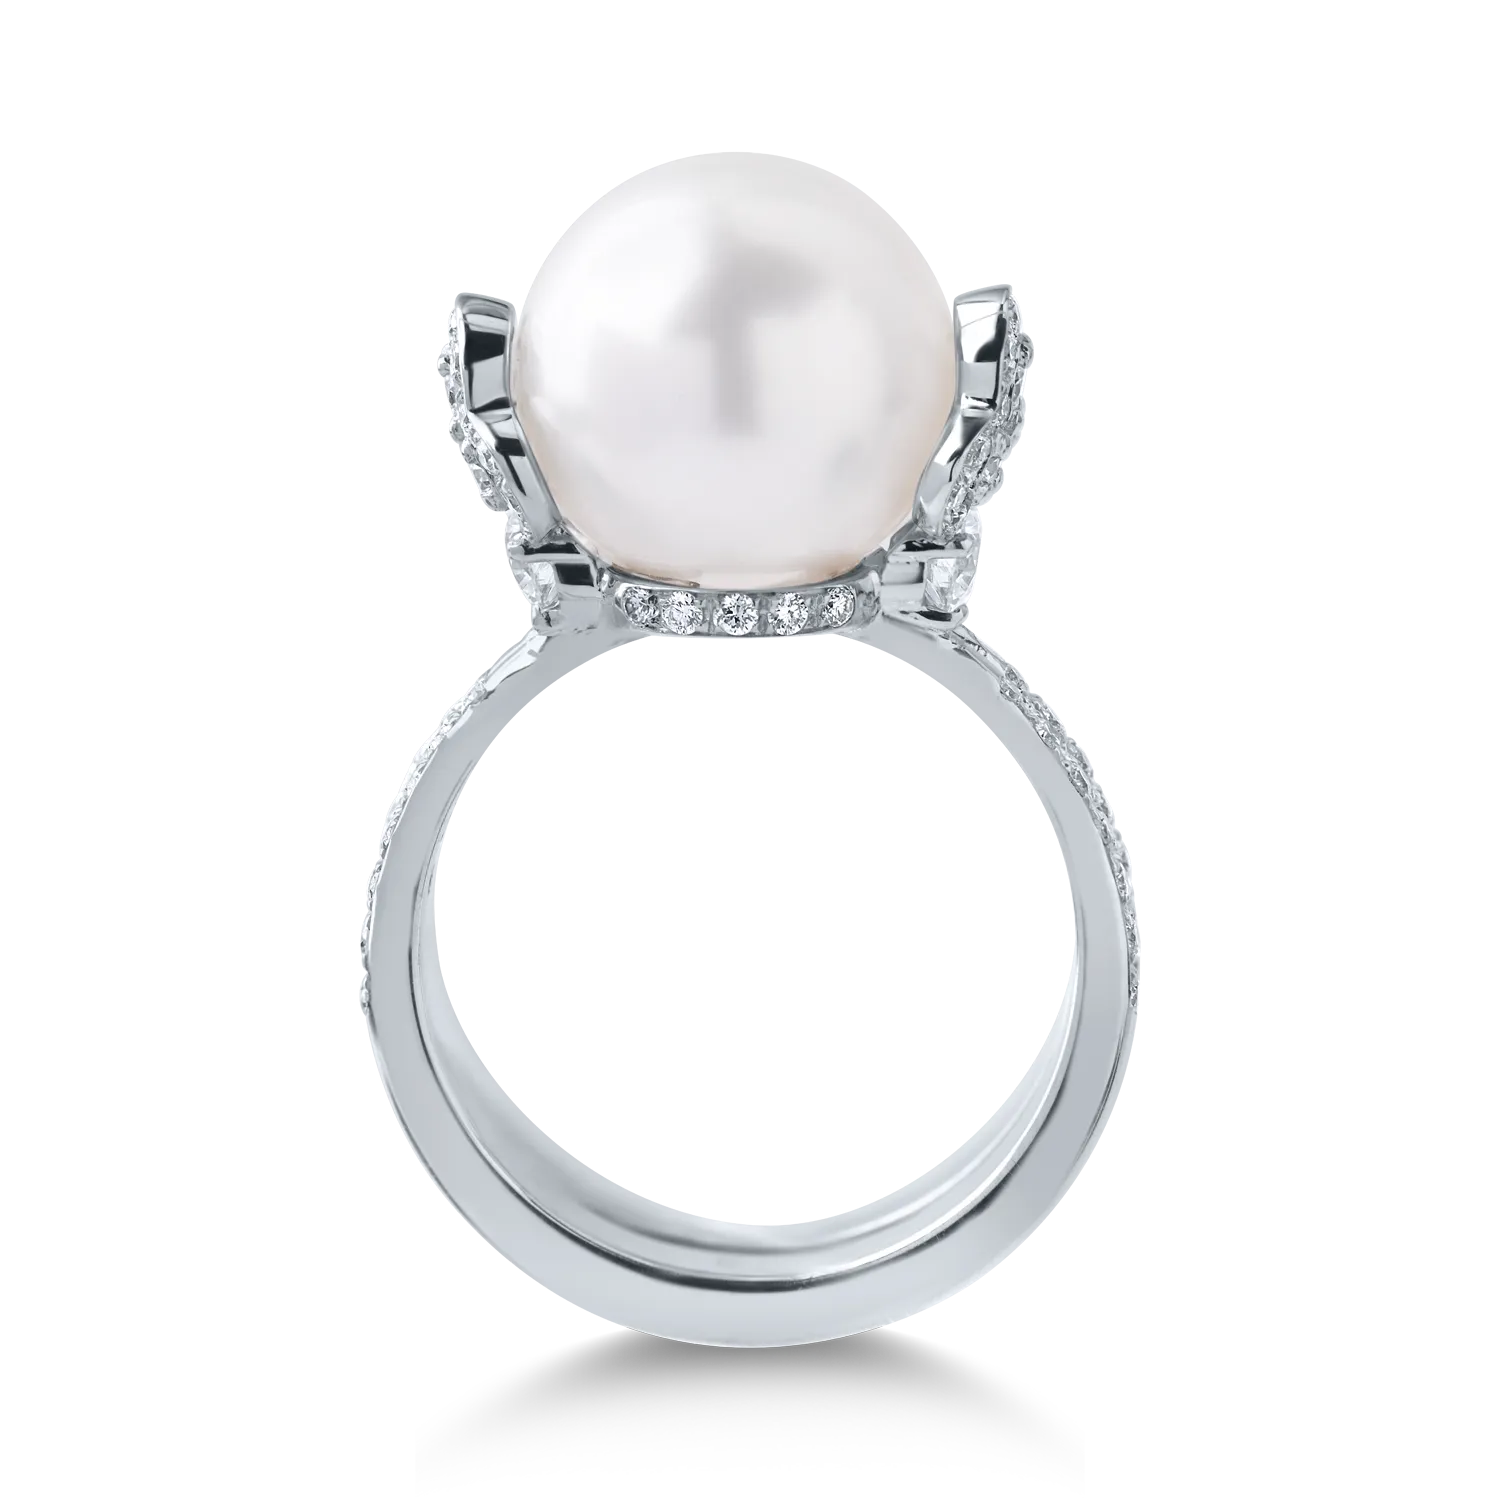 Inel din aur alb cu perla australiana de 12.09ct si diamante de 0.82ct